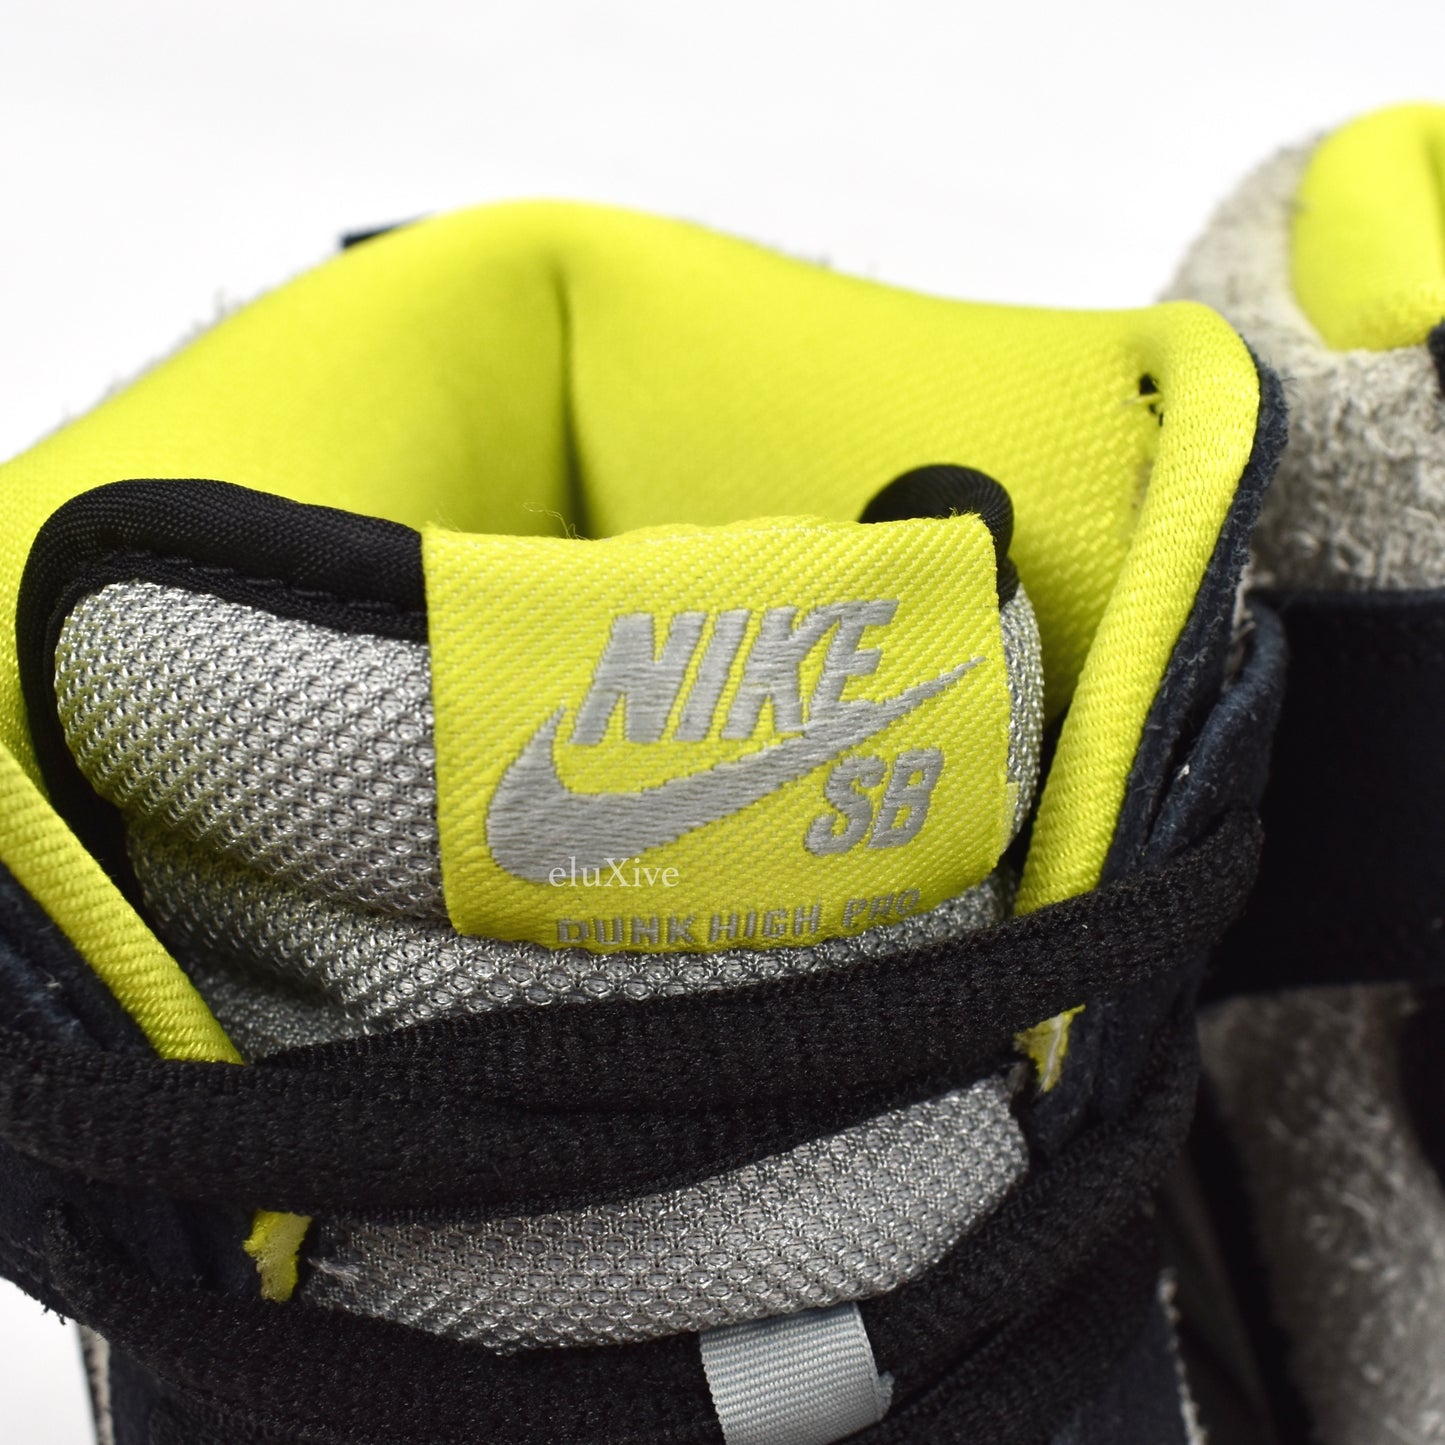 Nike - Dunk High Pro SB (Black/Base Gray)